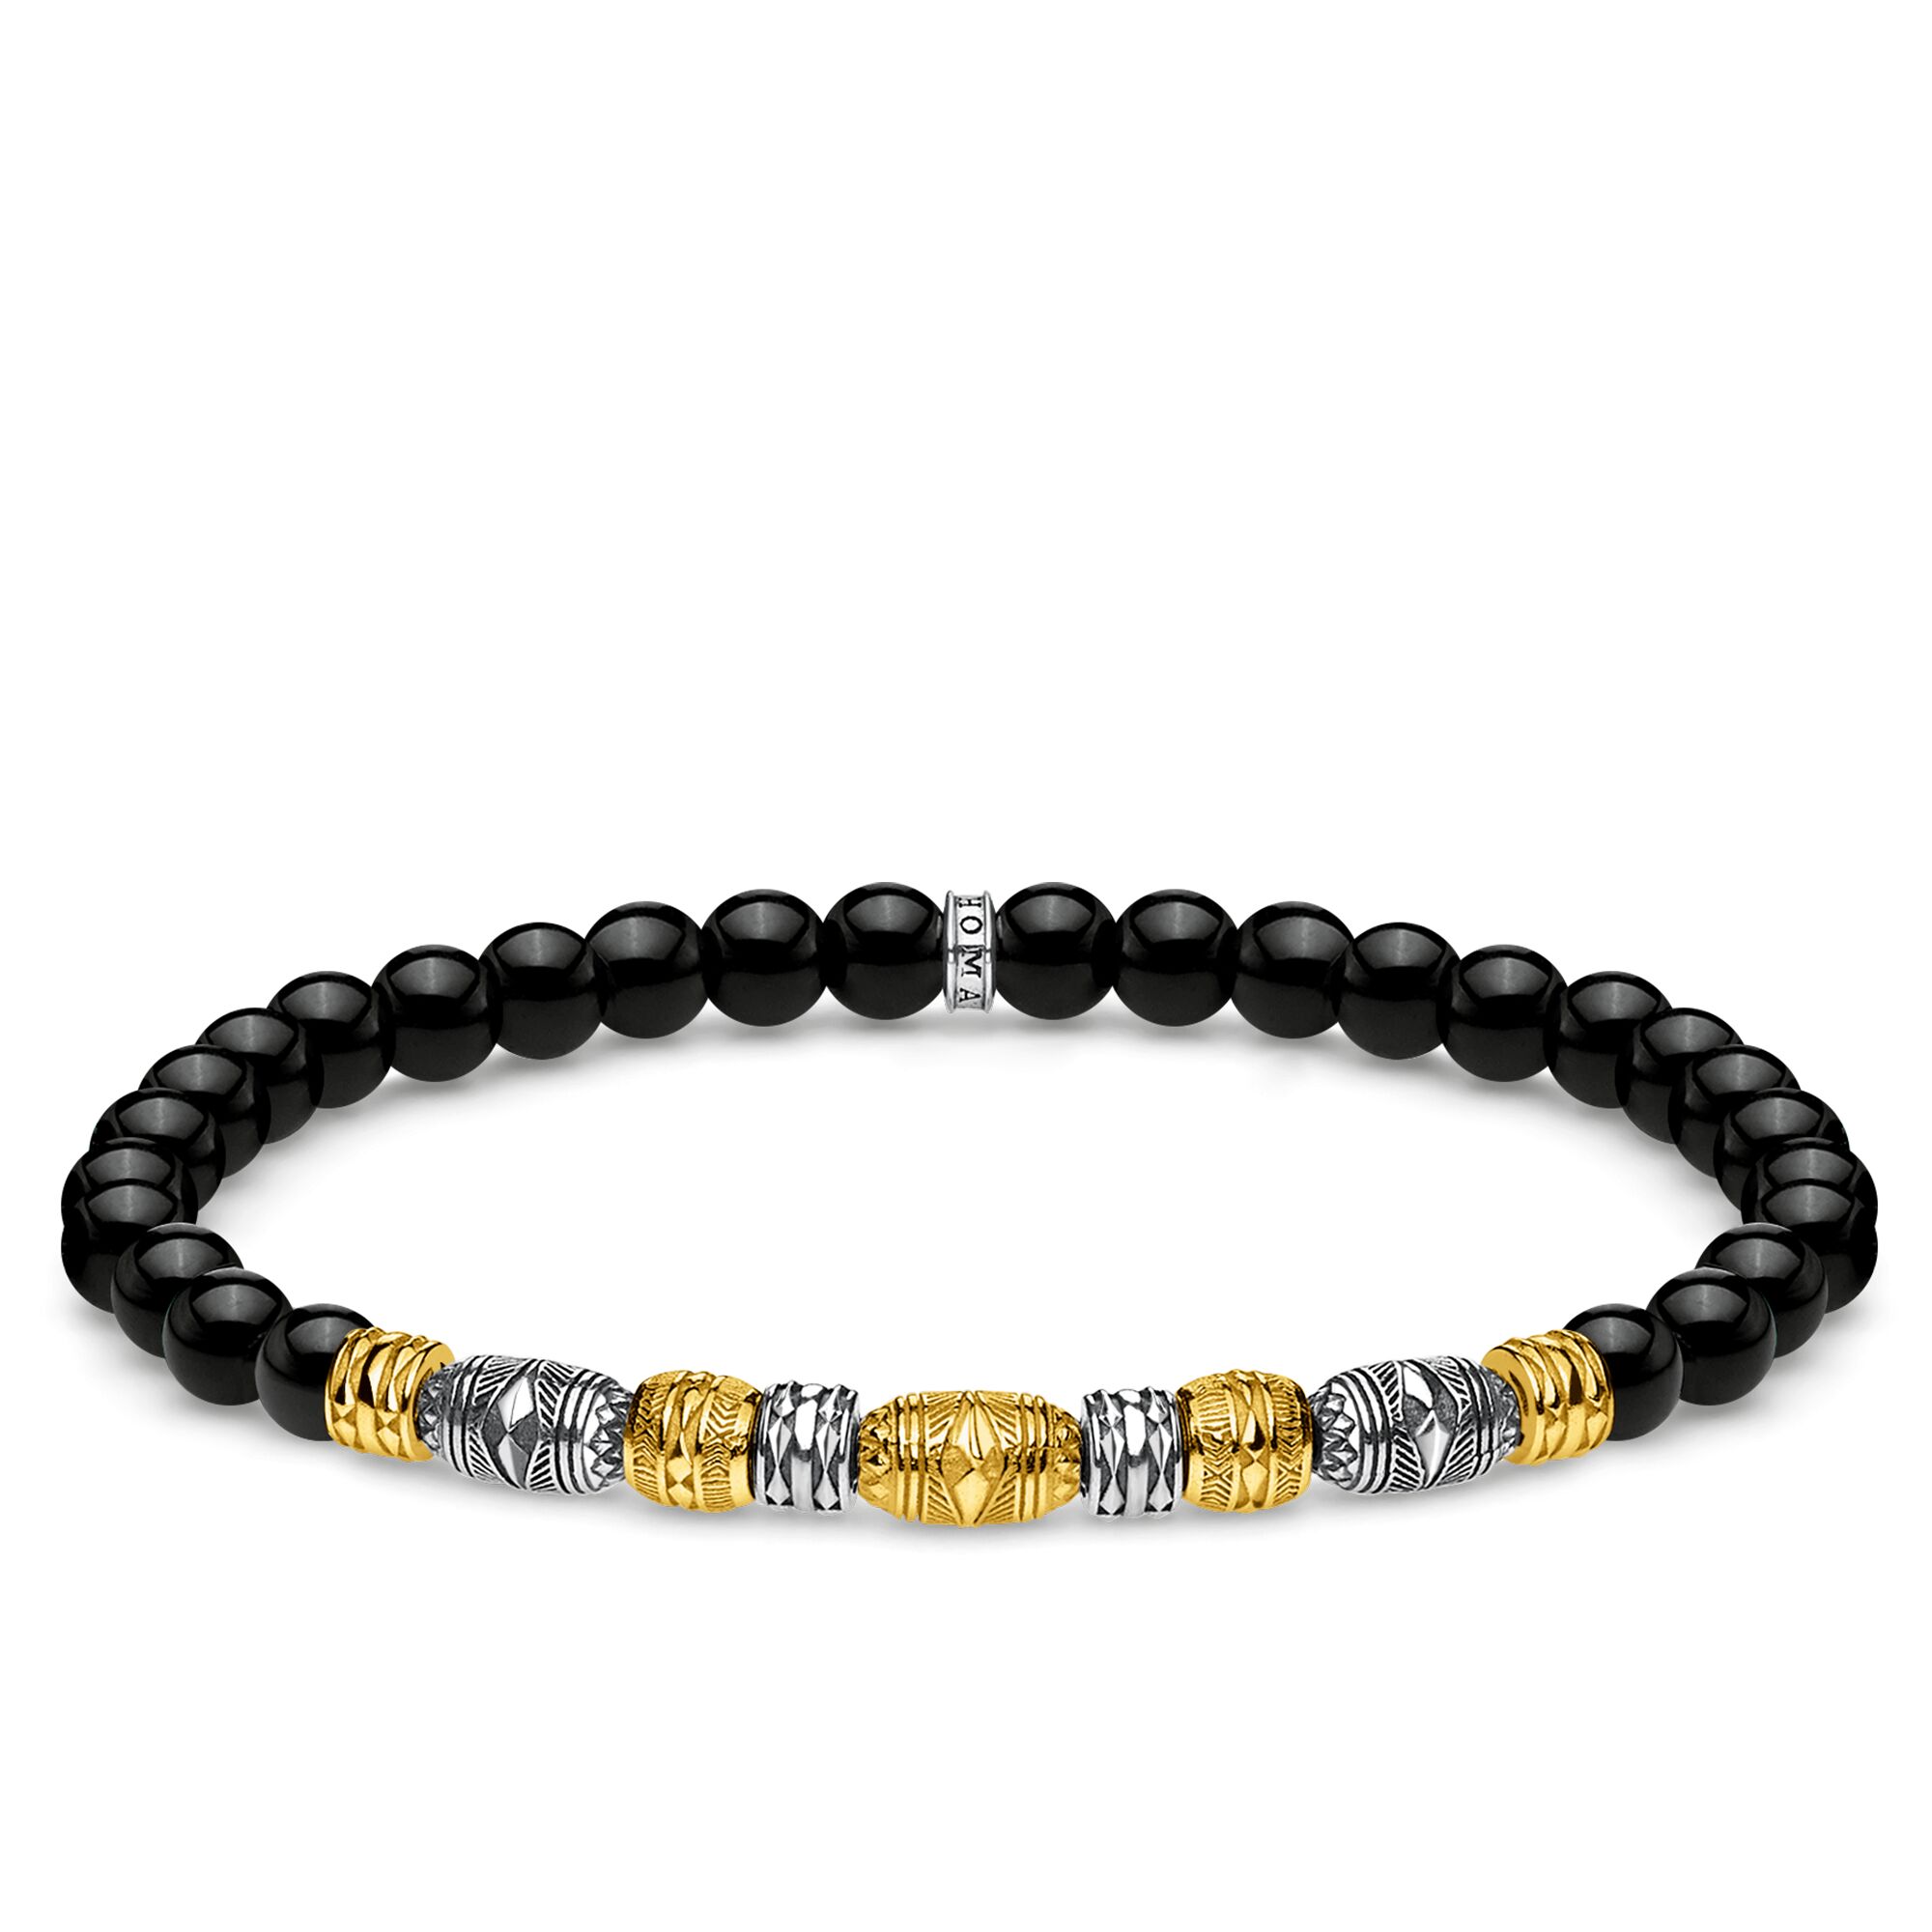 Wholesale OEM/ODM Jewelry Custom bracelet 18k yellow gold plating, 925 Sterling silver, blackened manufacturer